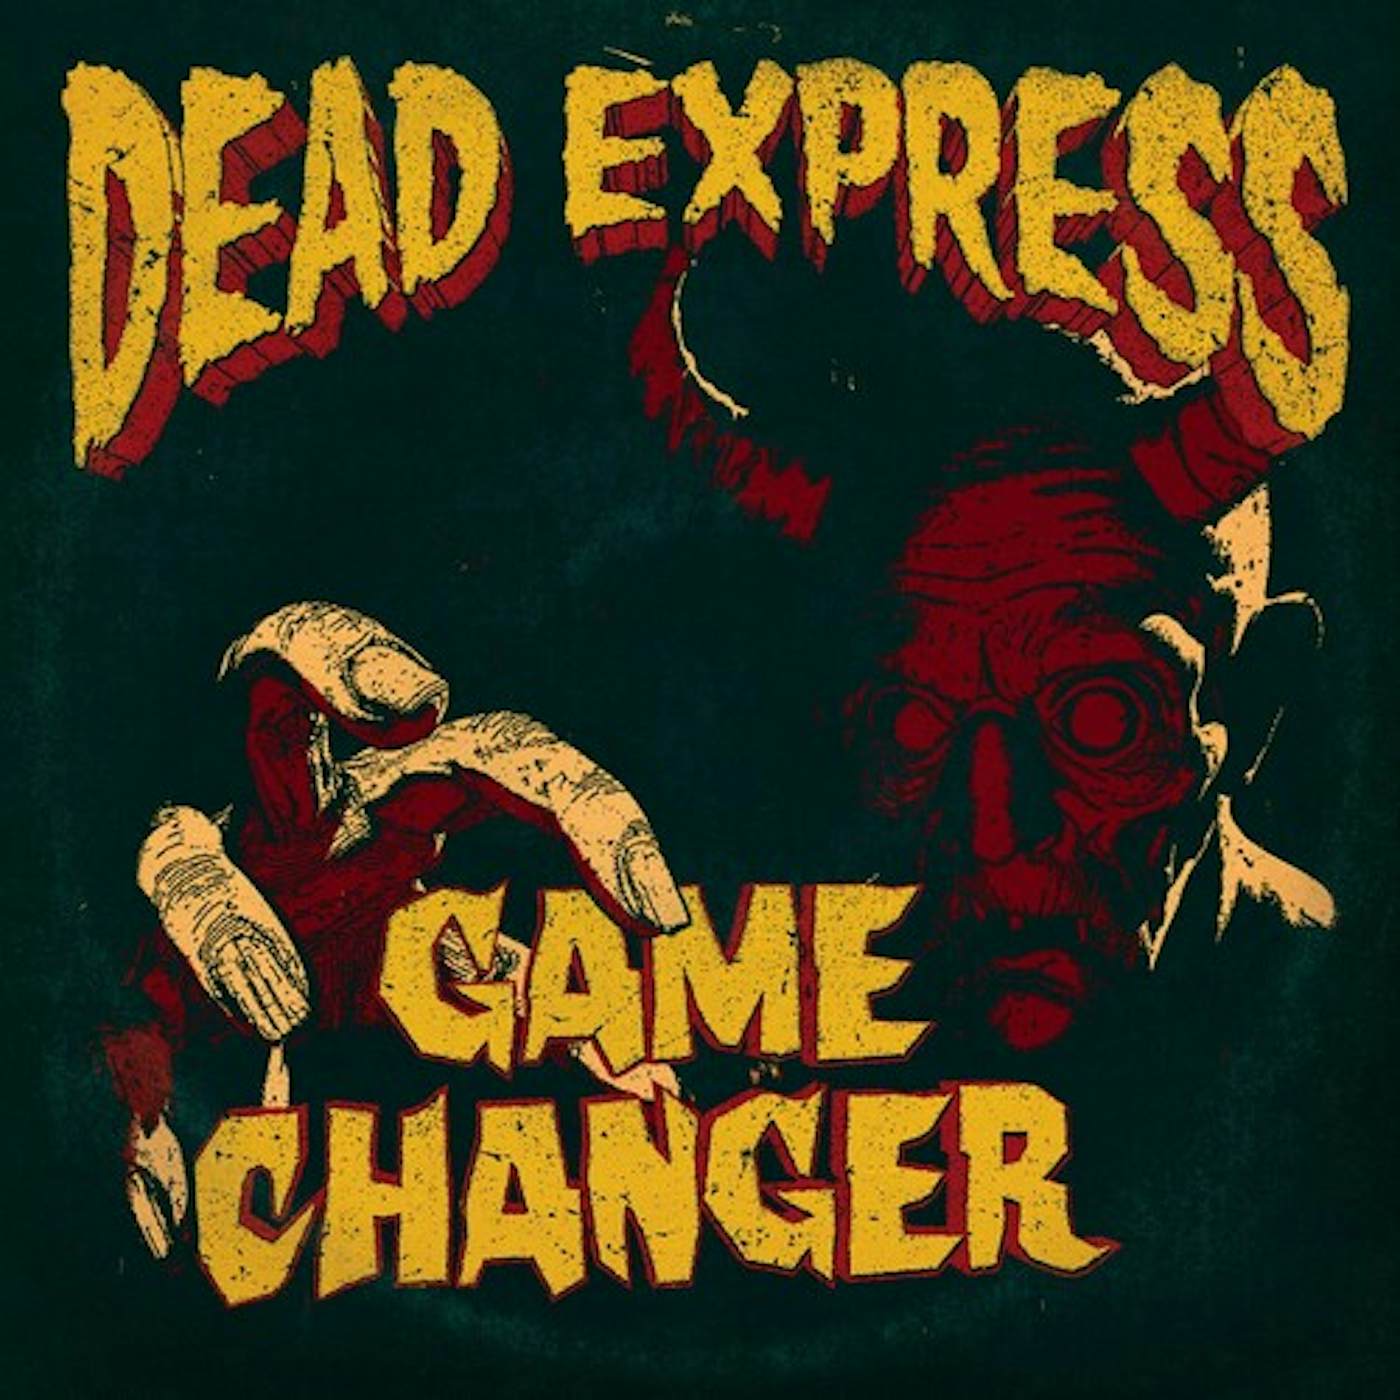 Dead Express GAME CHANGER CD